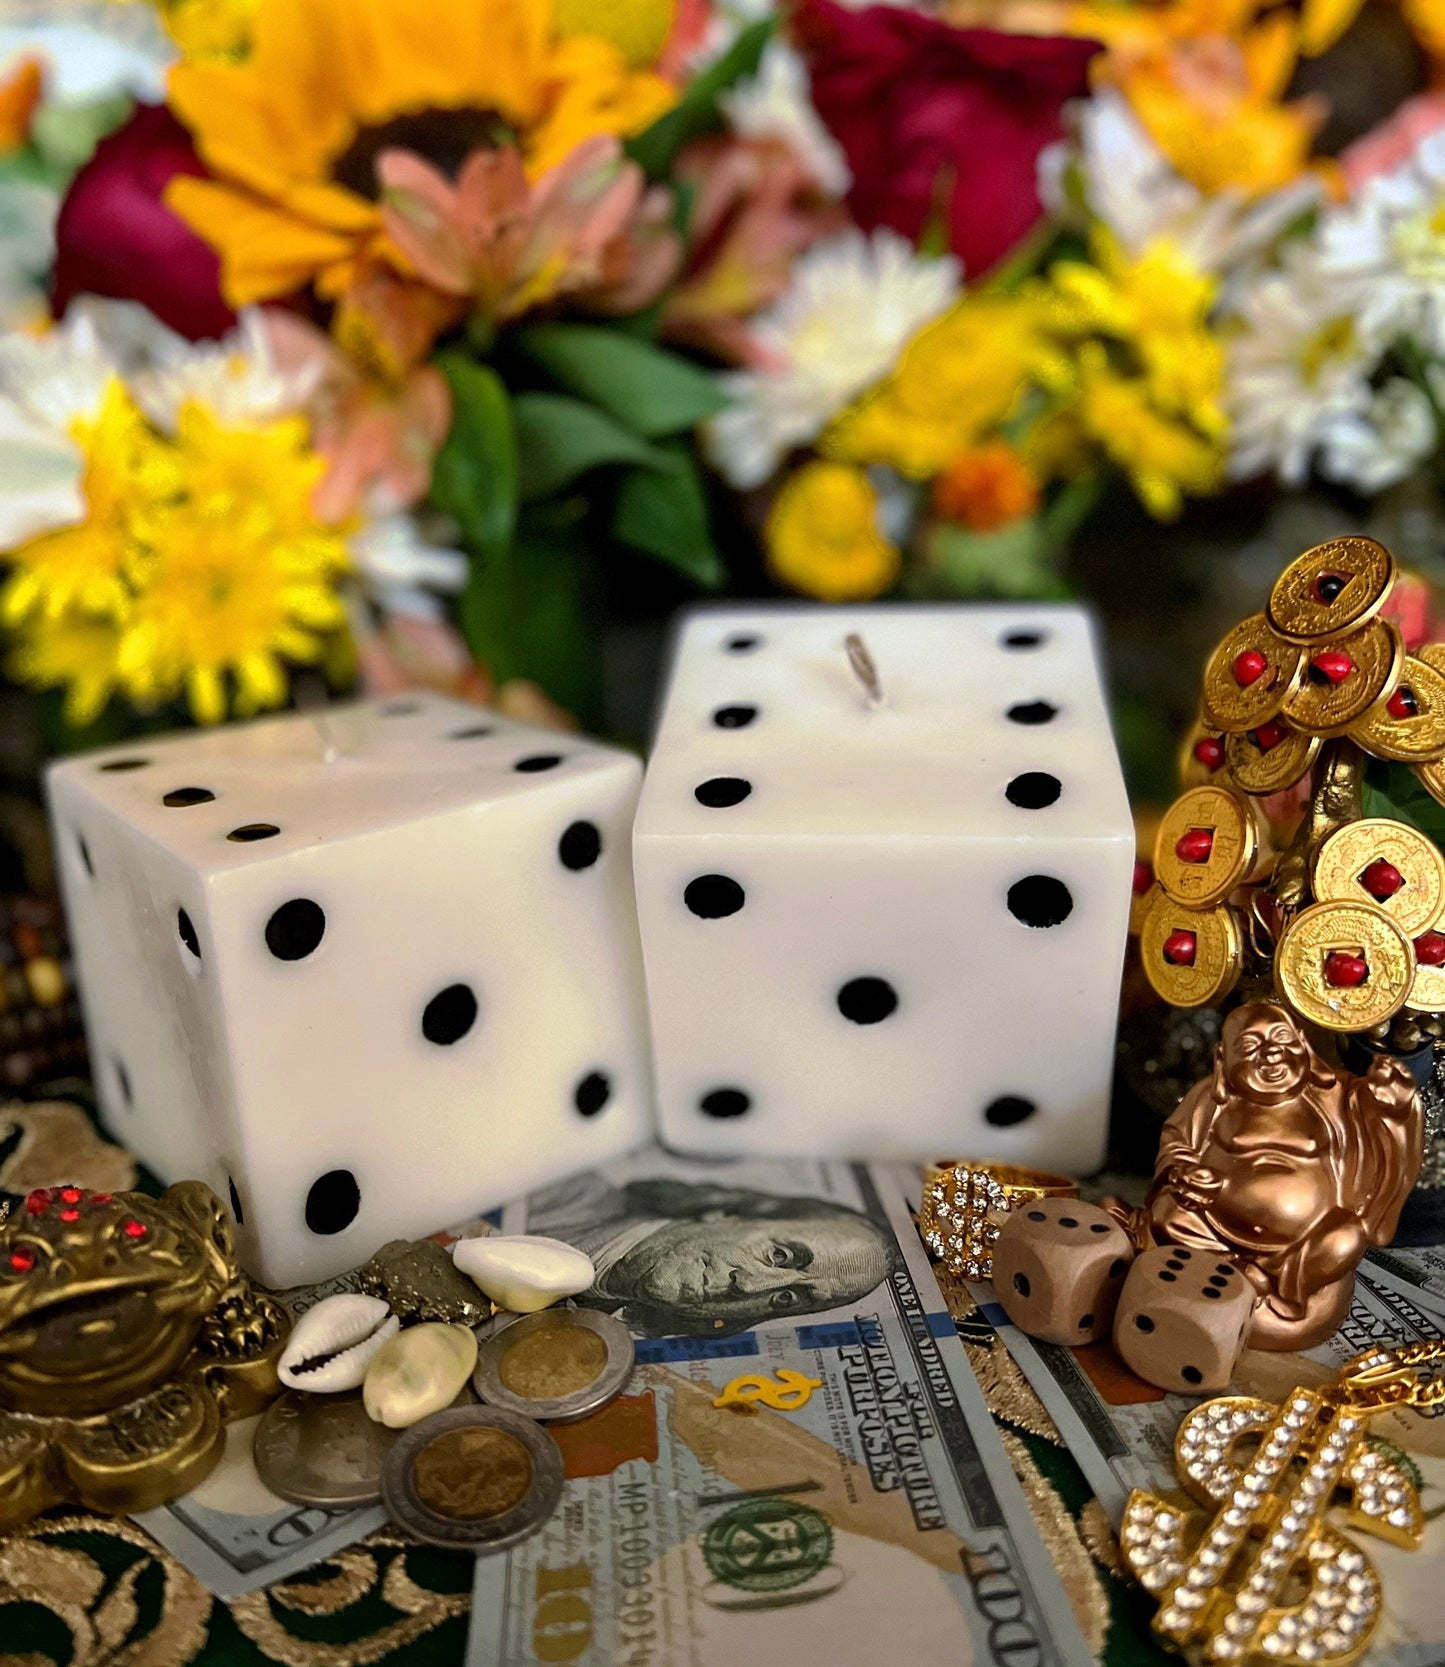 Die Candle + Dice + Luck + Wealth + Gambling + Suerte + Lottery